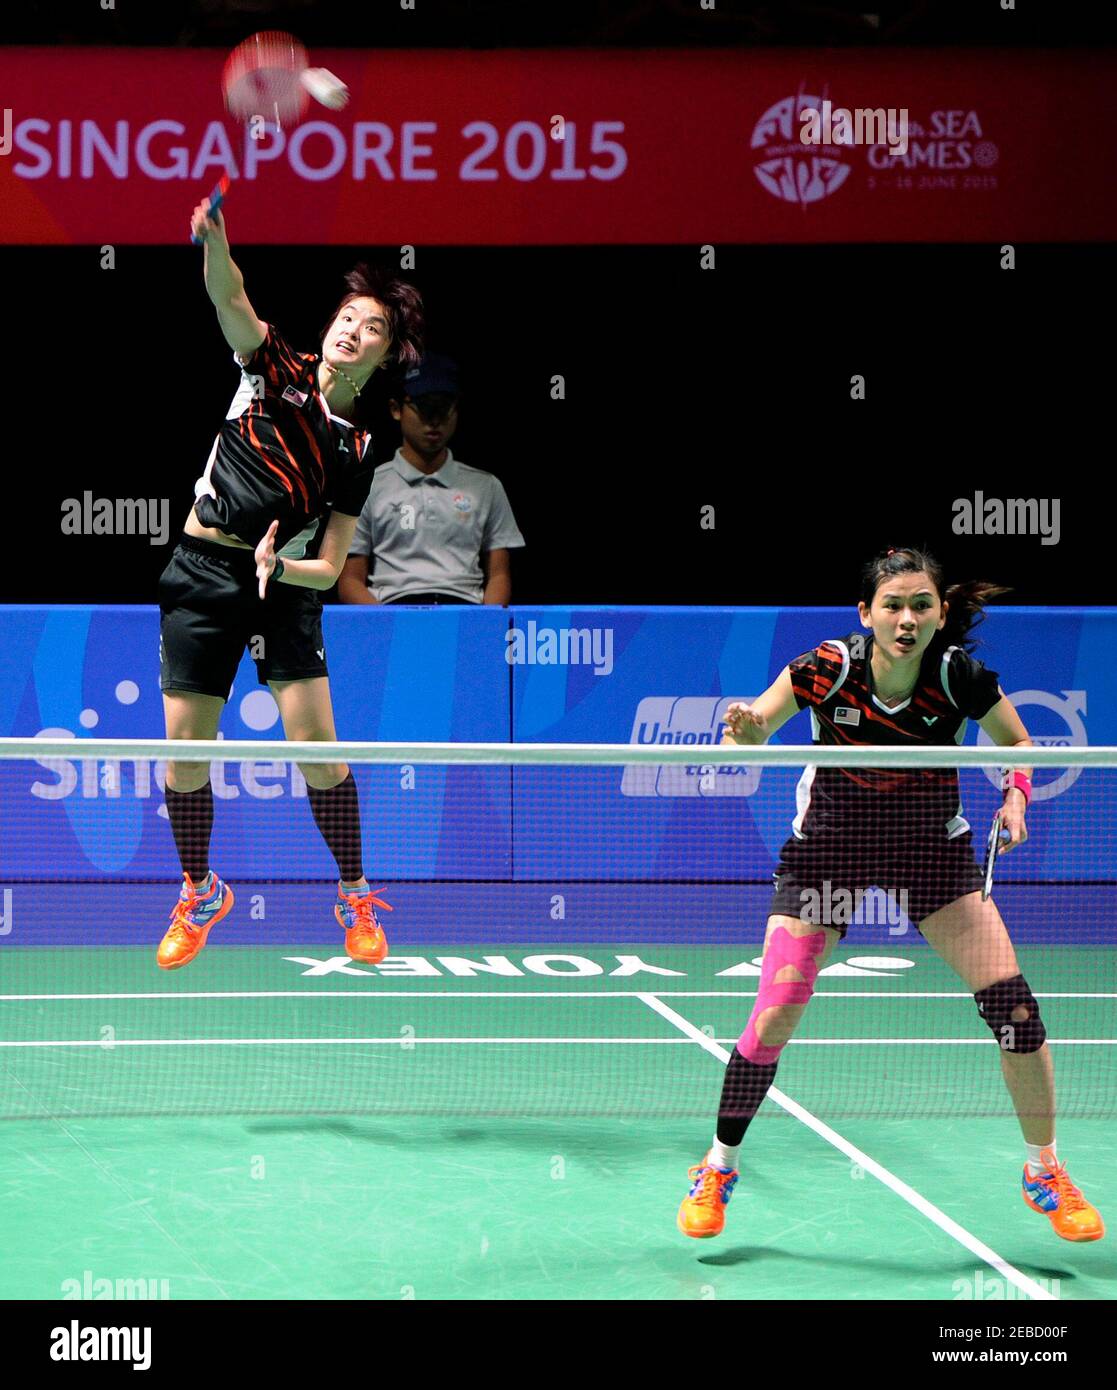 Malaysia vs singapore badminton